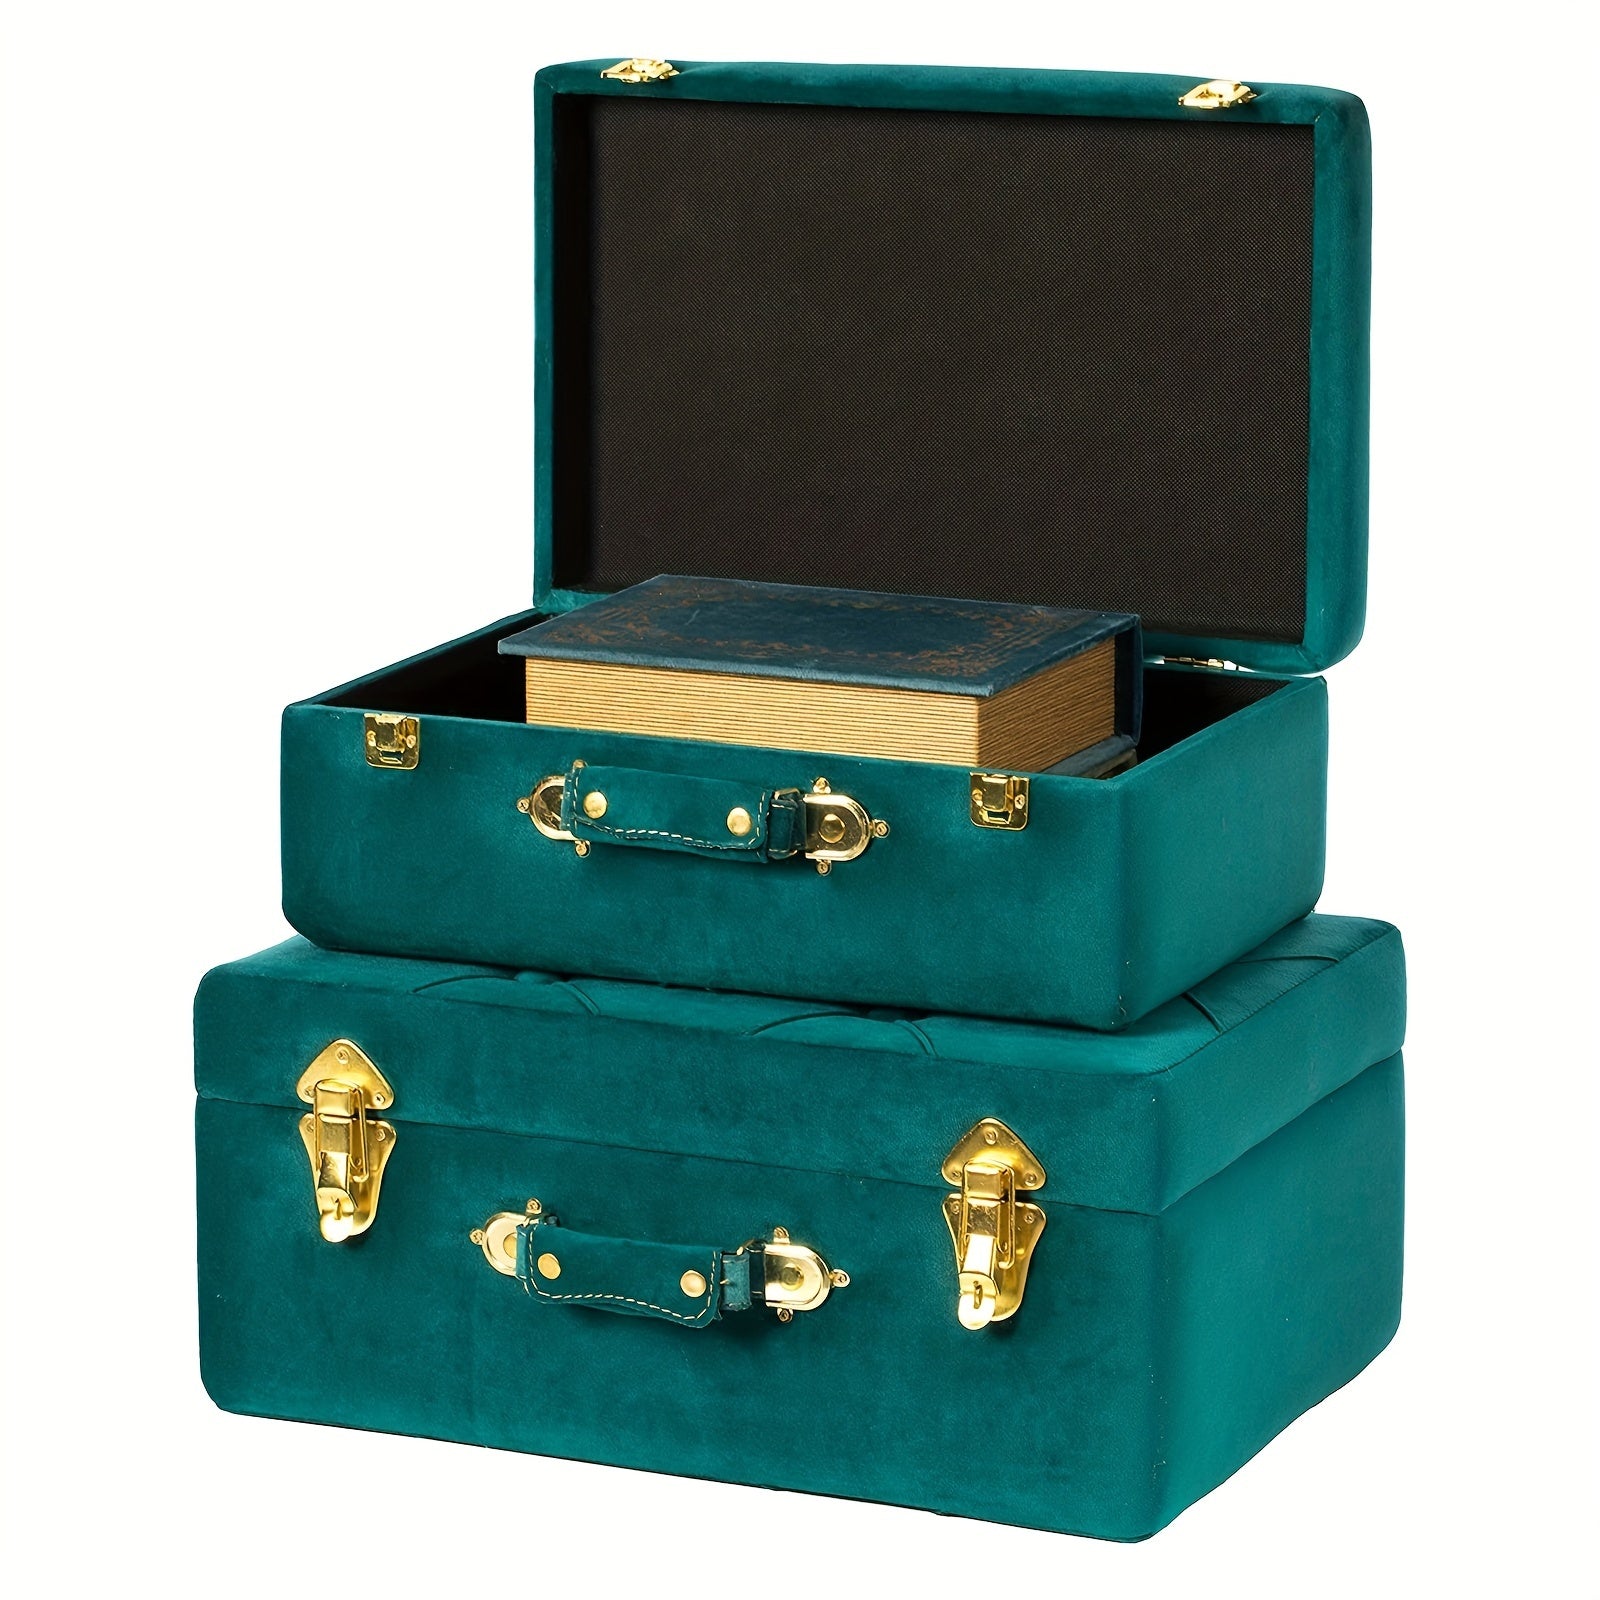 Set Of 2,Vintiquewise Decorative Tufted Velvet Suitcase Treasure Chest,L:18.9X13X7.8 S:16.5X10.6X6.3 Inch,Retro Multi-purpose Ornaments For Home Storage Interior Decor